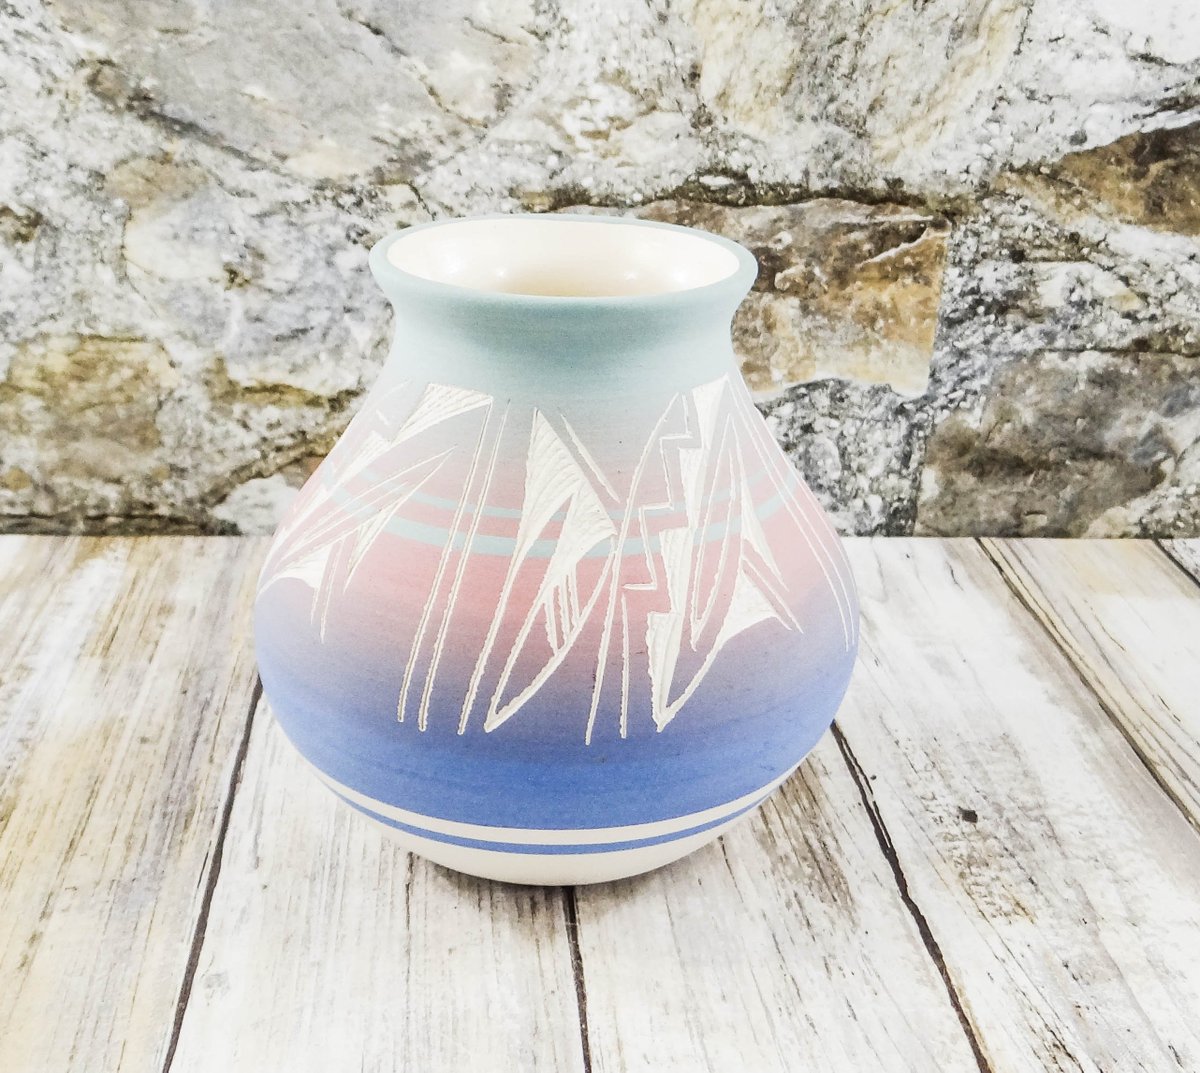 Southwest Padilla Pottery Vase etsy.me/2QlvMGo #housewares #vase #entryway #navajopottery #padillapottery #potteryvase #southwestpottery #etchedpottery #pastelcolors